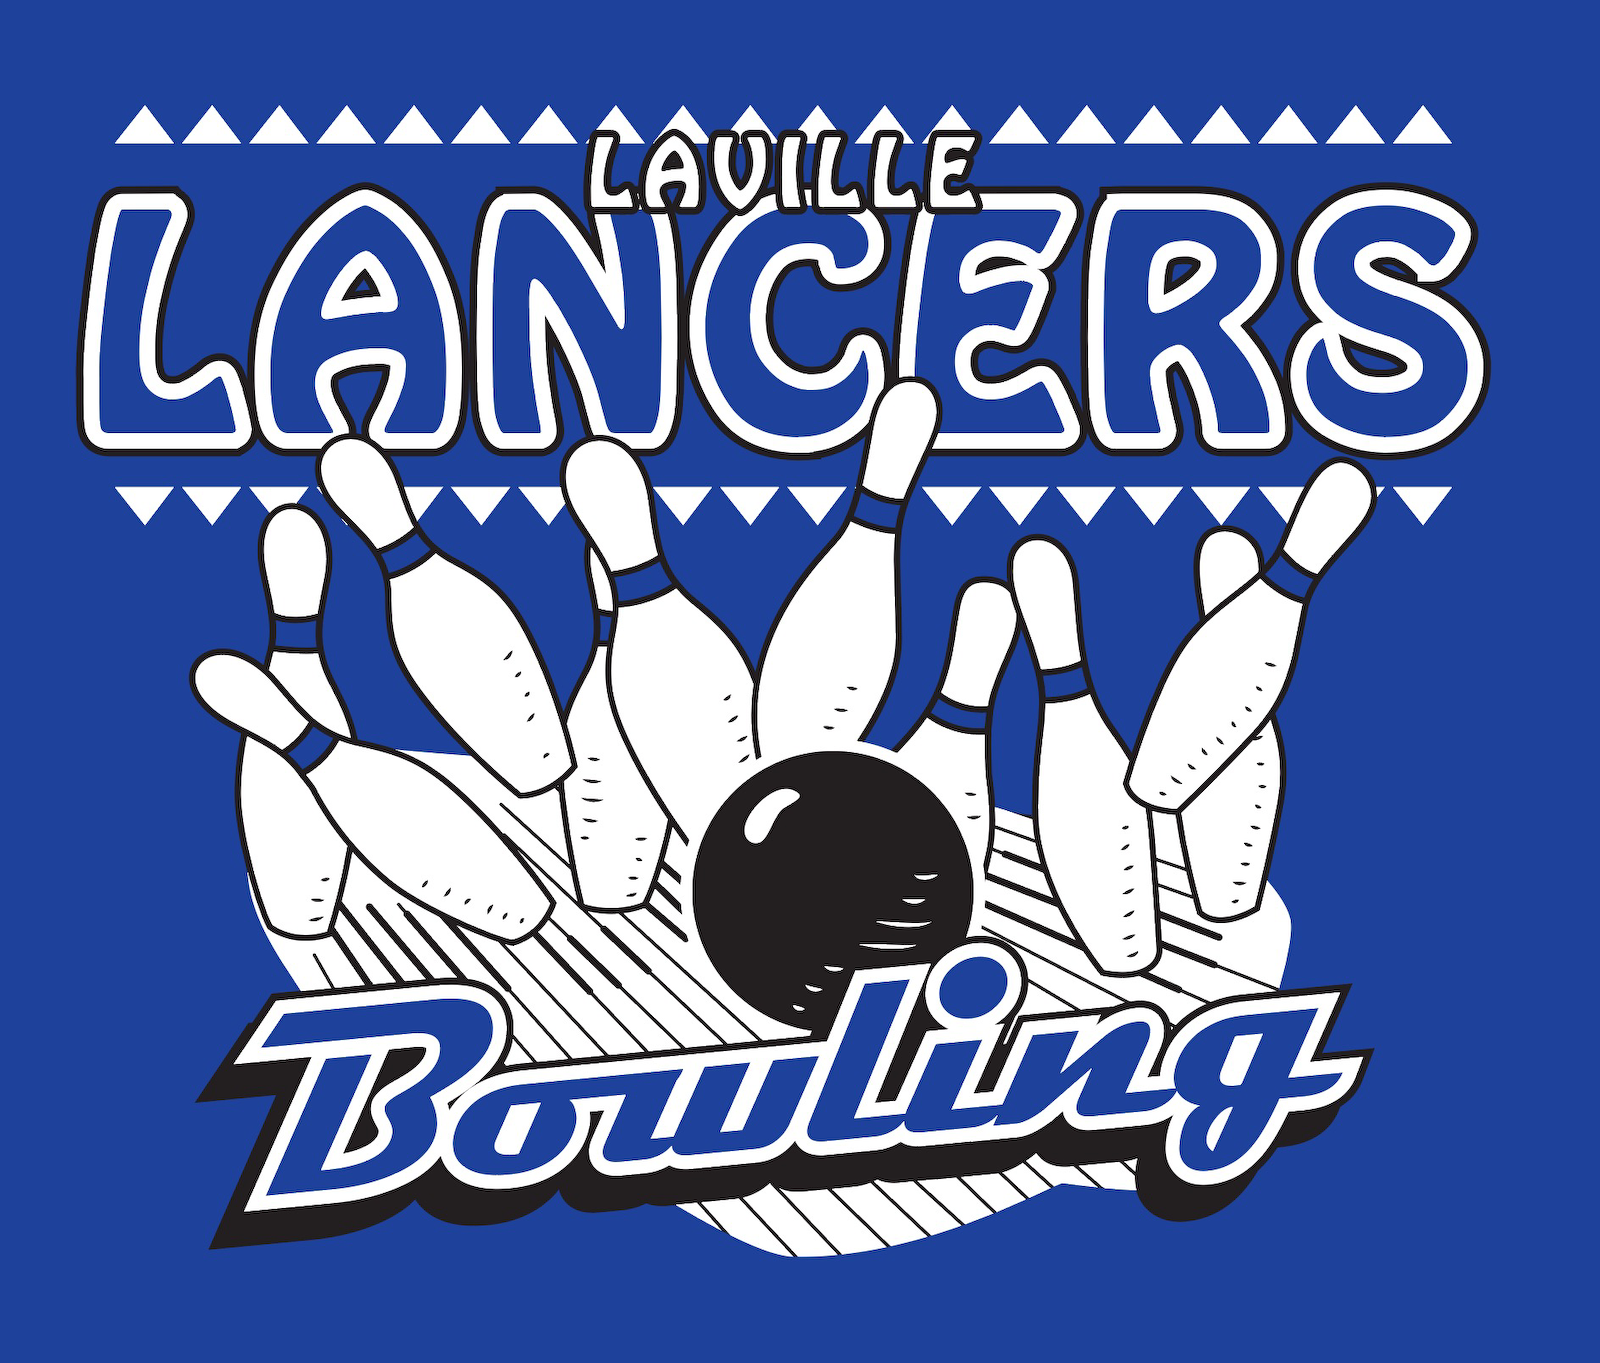 LaVille Bowling Set To Open Season cover photo